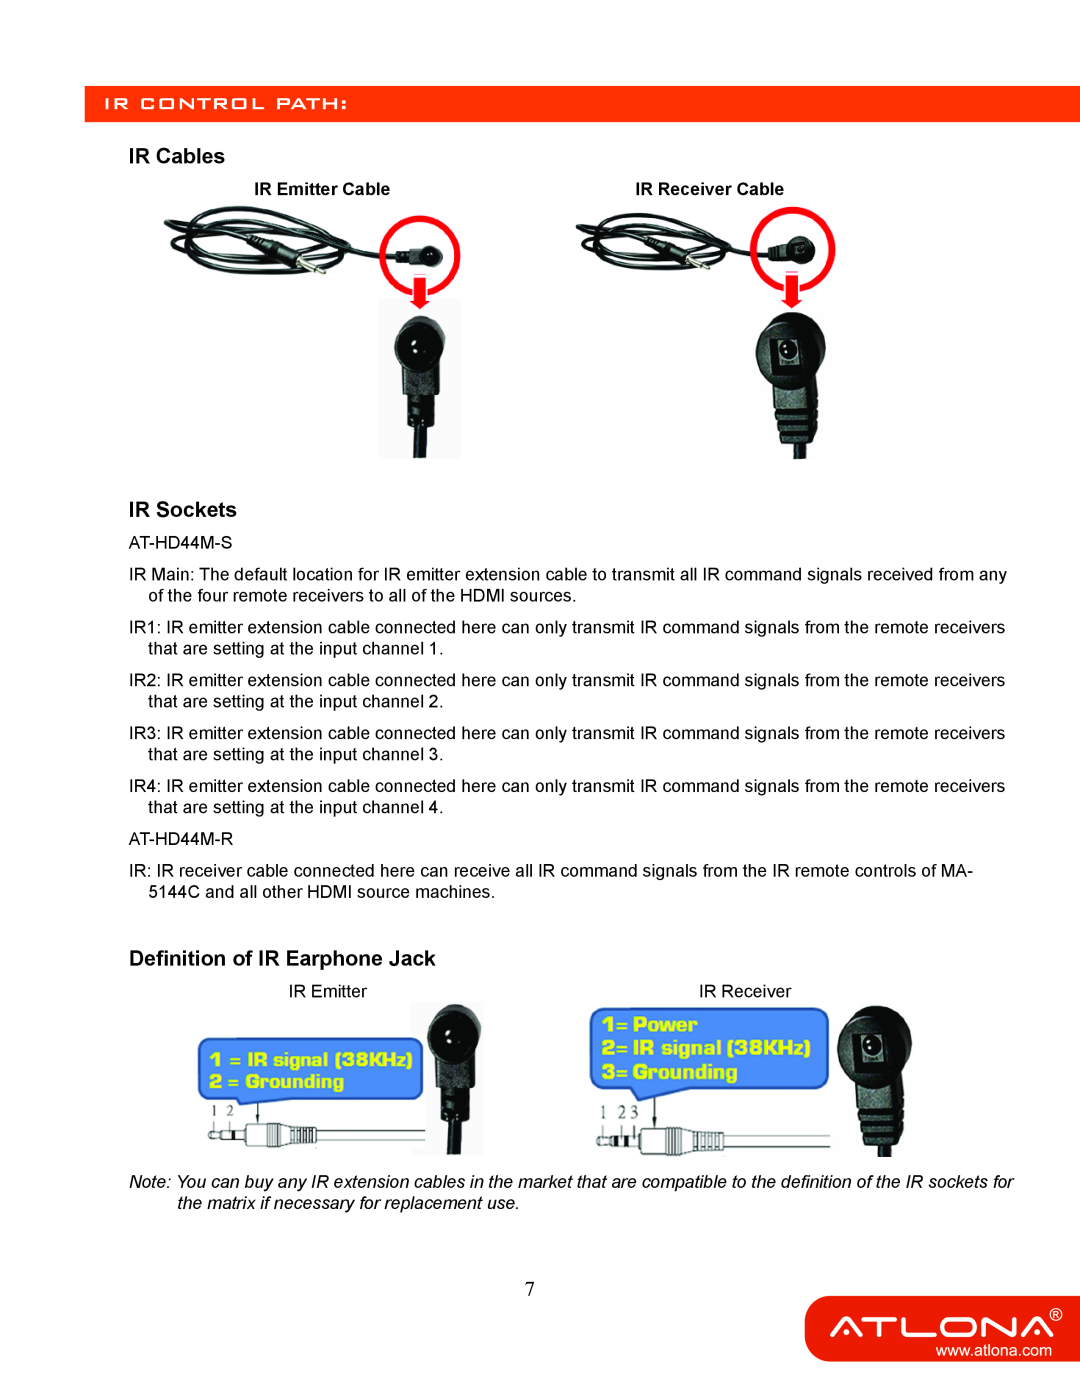 Atlona AT-HD44M-SR manual Ir Control Path, IR Cables, IR Sockets, Definition of IR Earphone Jack, IR Emitter Cable 